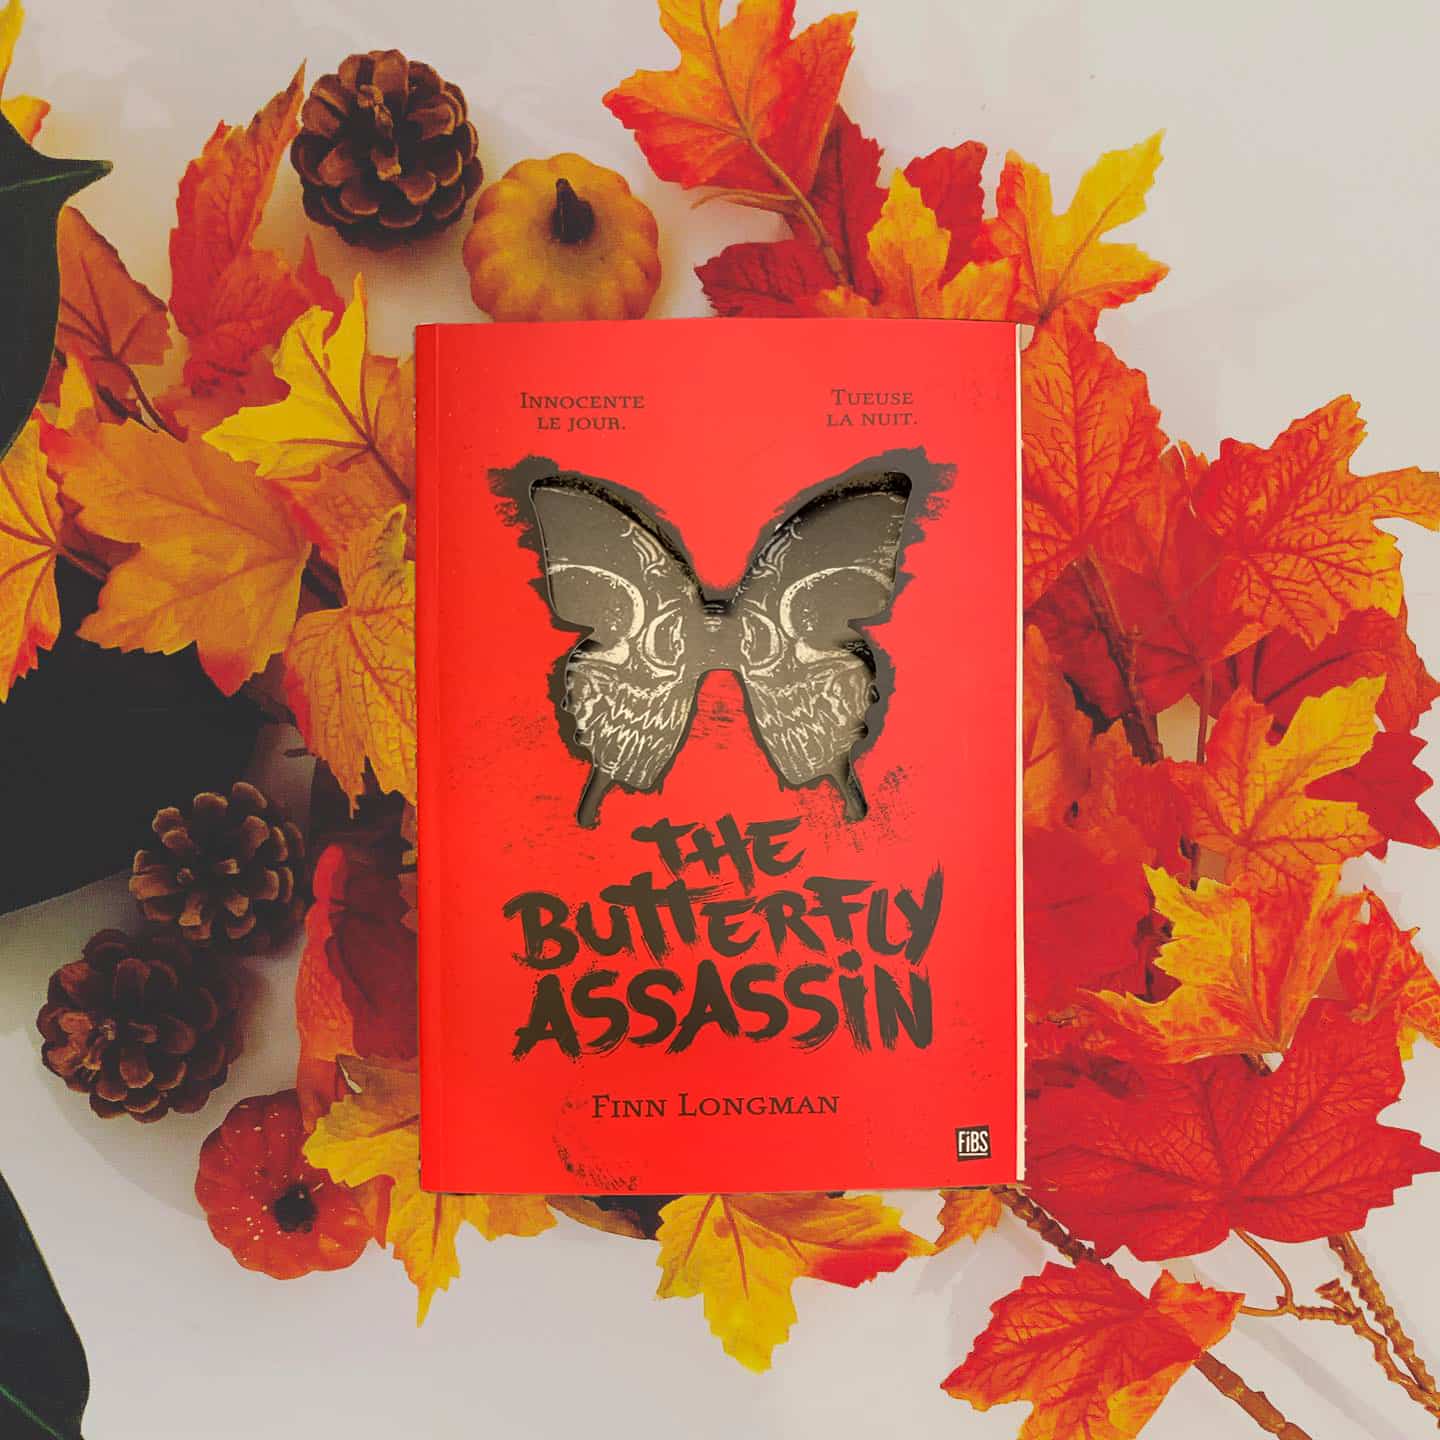 The butterfly assassin - Finn Longman